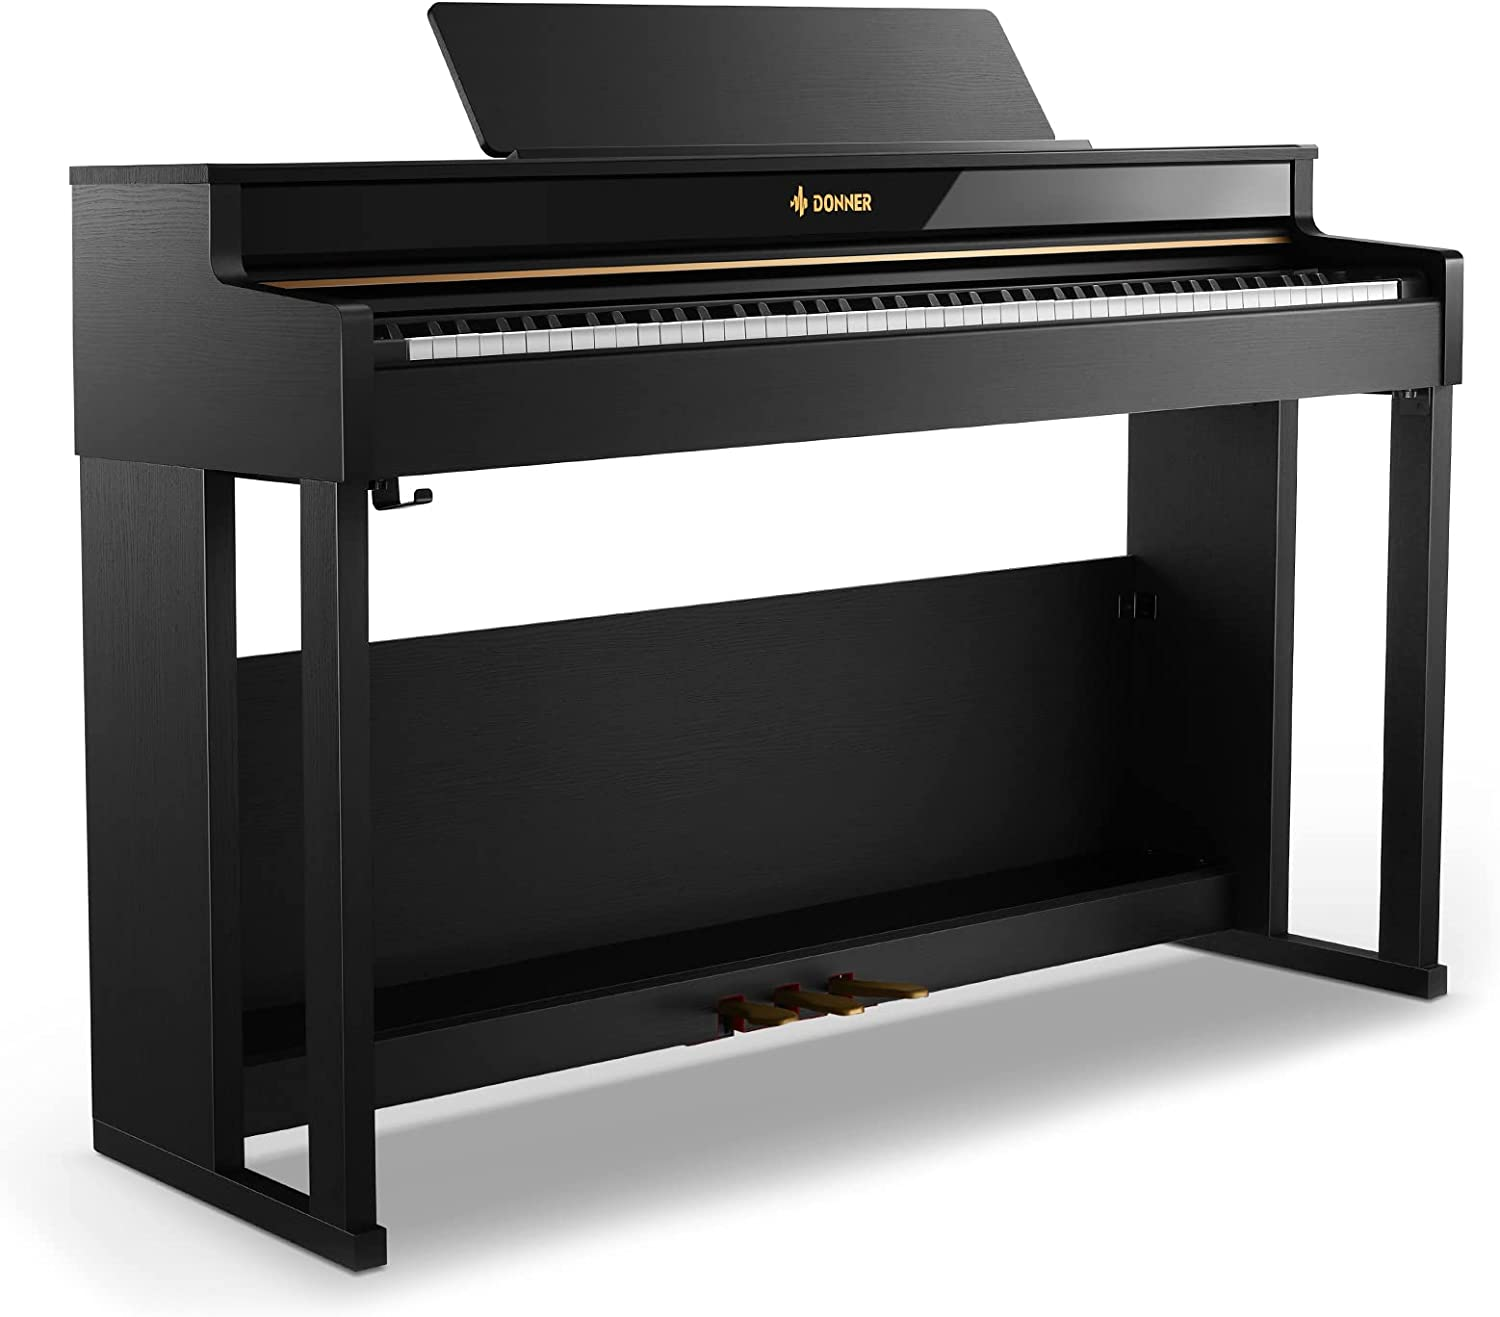 DONNER Digital Piano DDP-400 Black